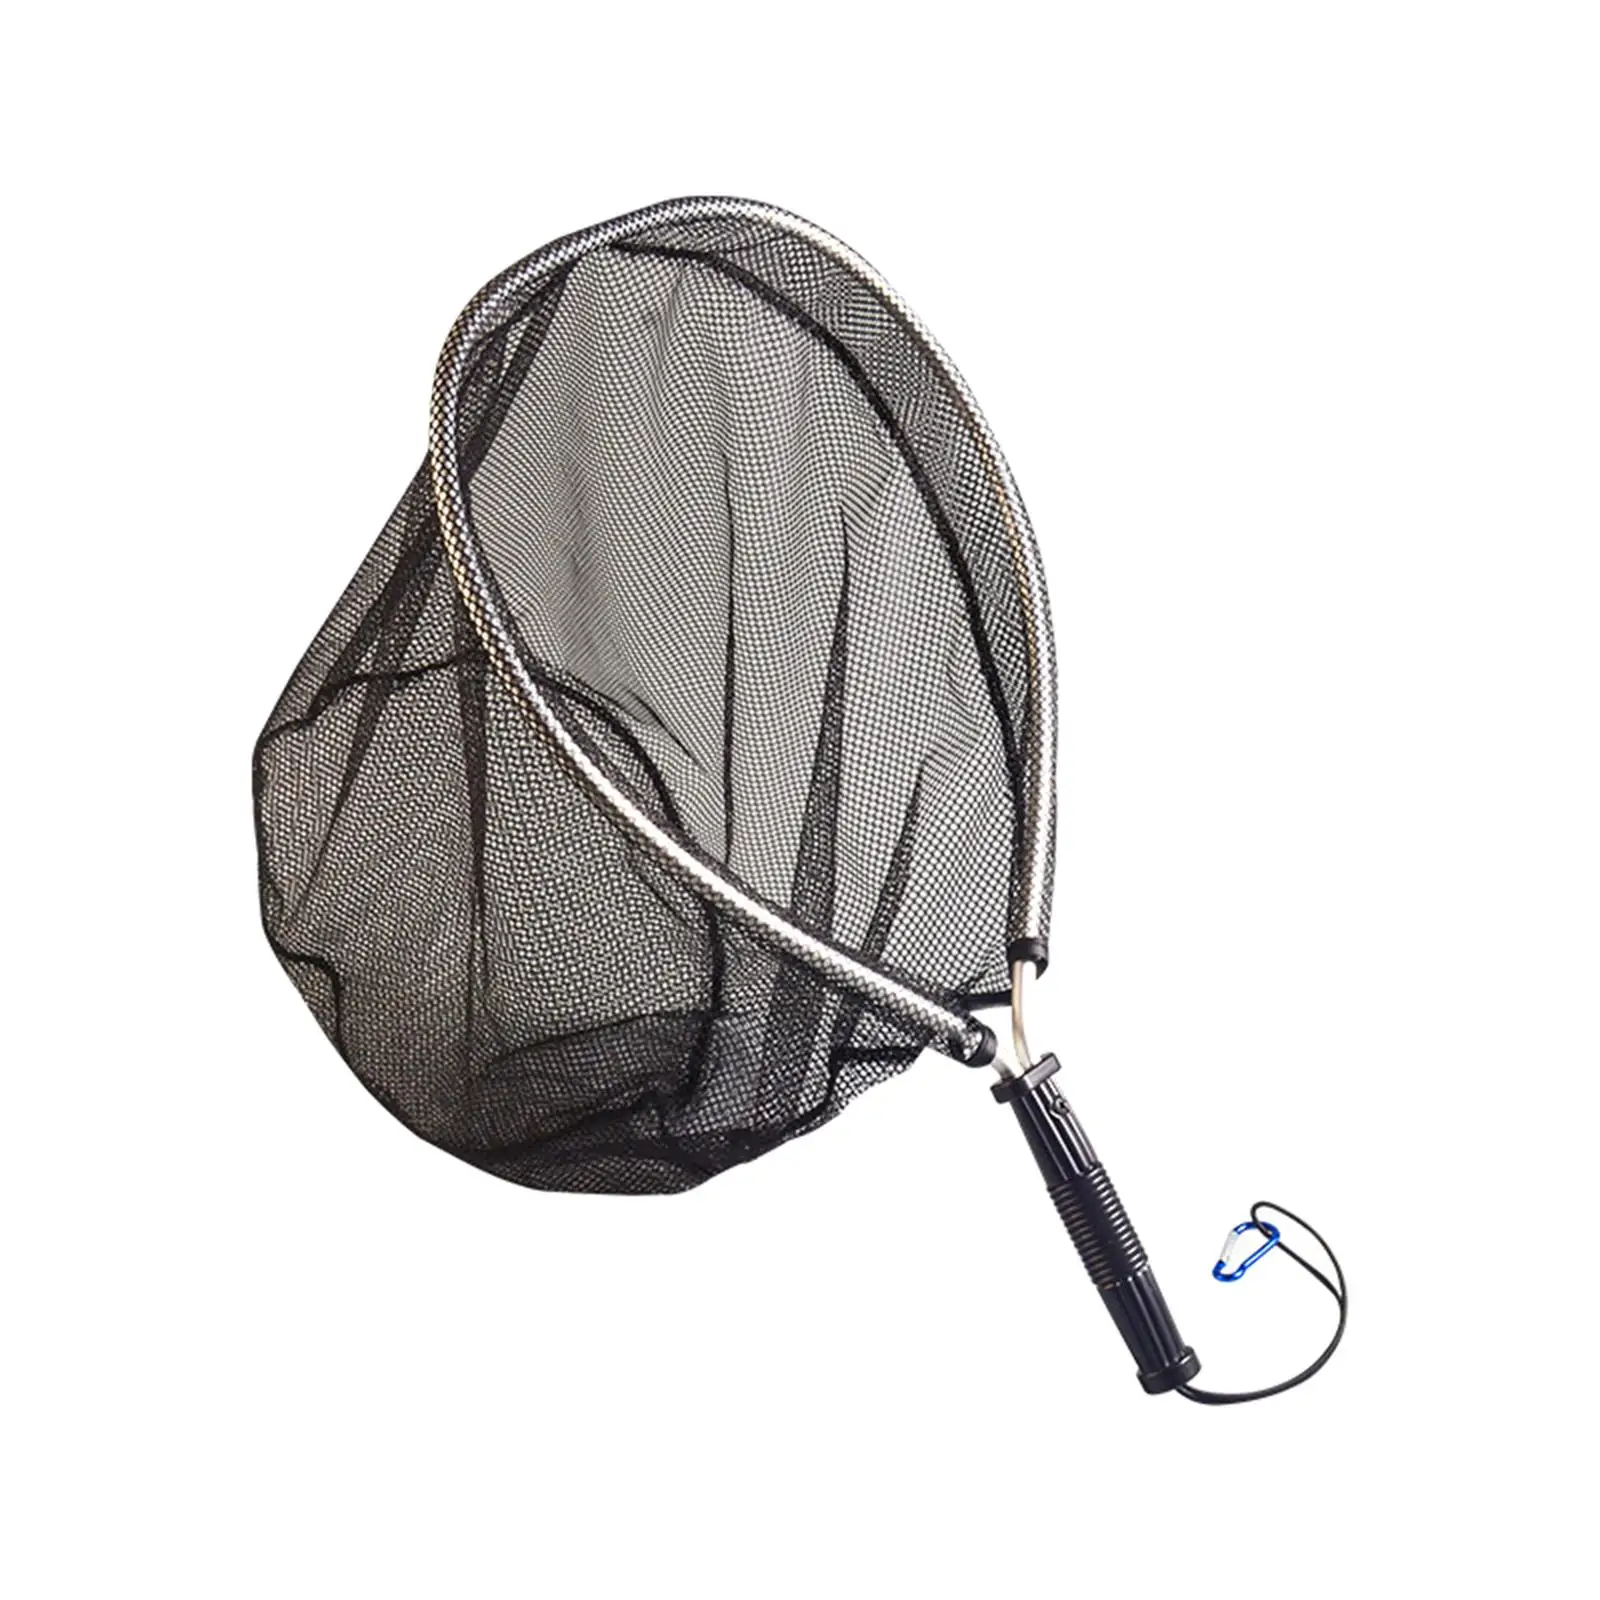 Fishing Landing Net Durable Lightweight Fishing Mesh Net Nonslip Comfortable Grip for Outdoor Boat Freshwater Saltwater Fishing